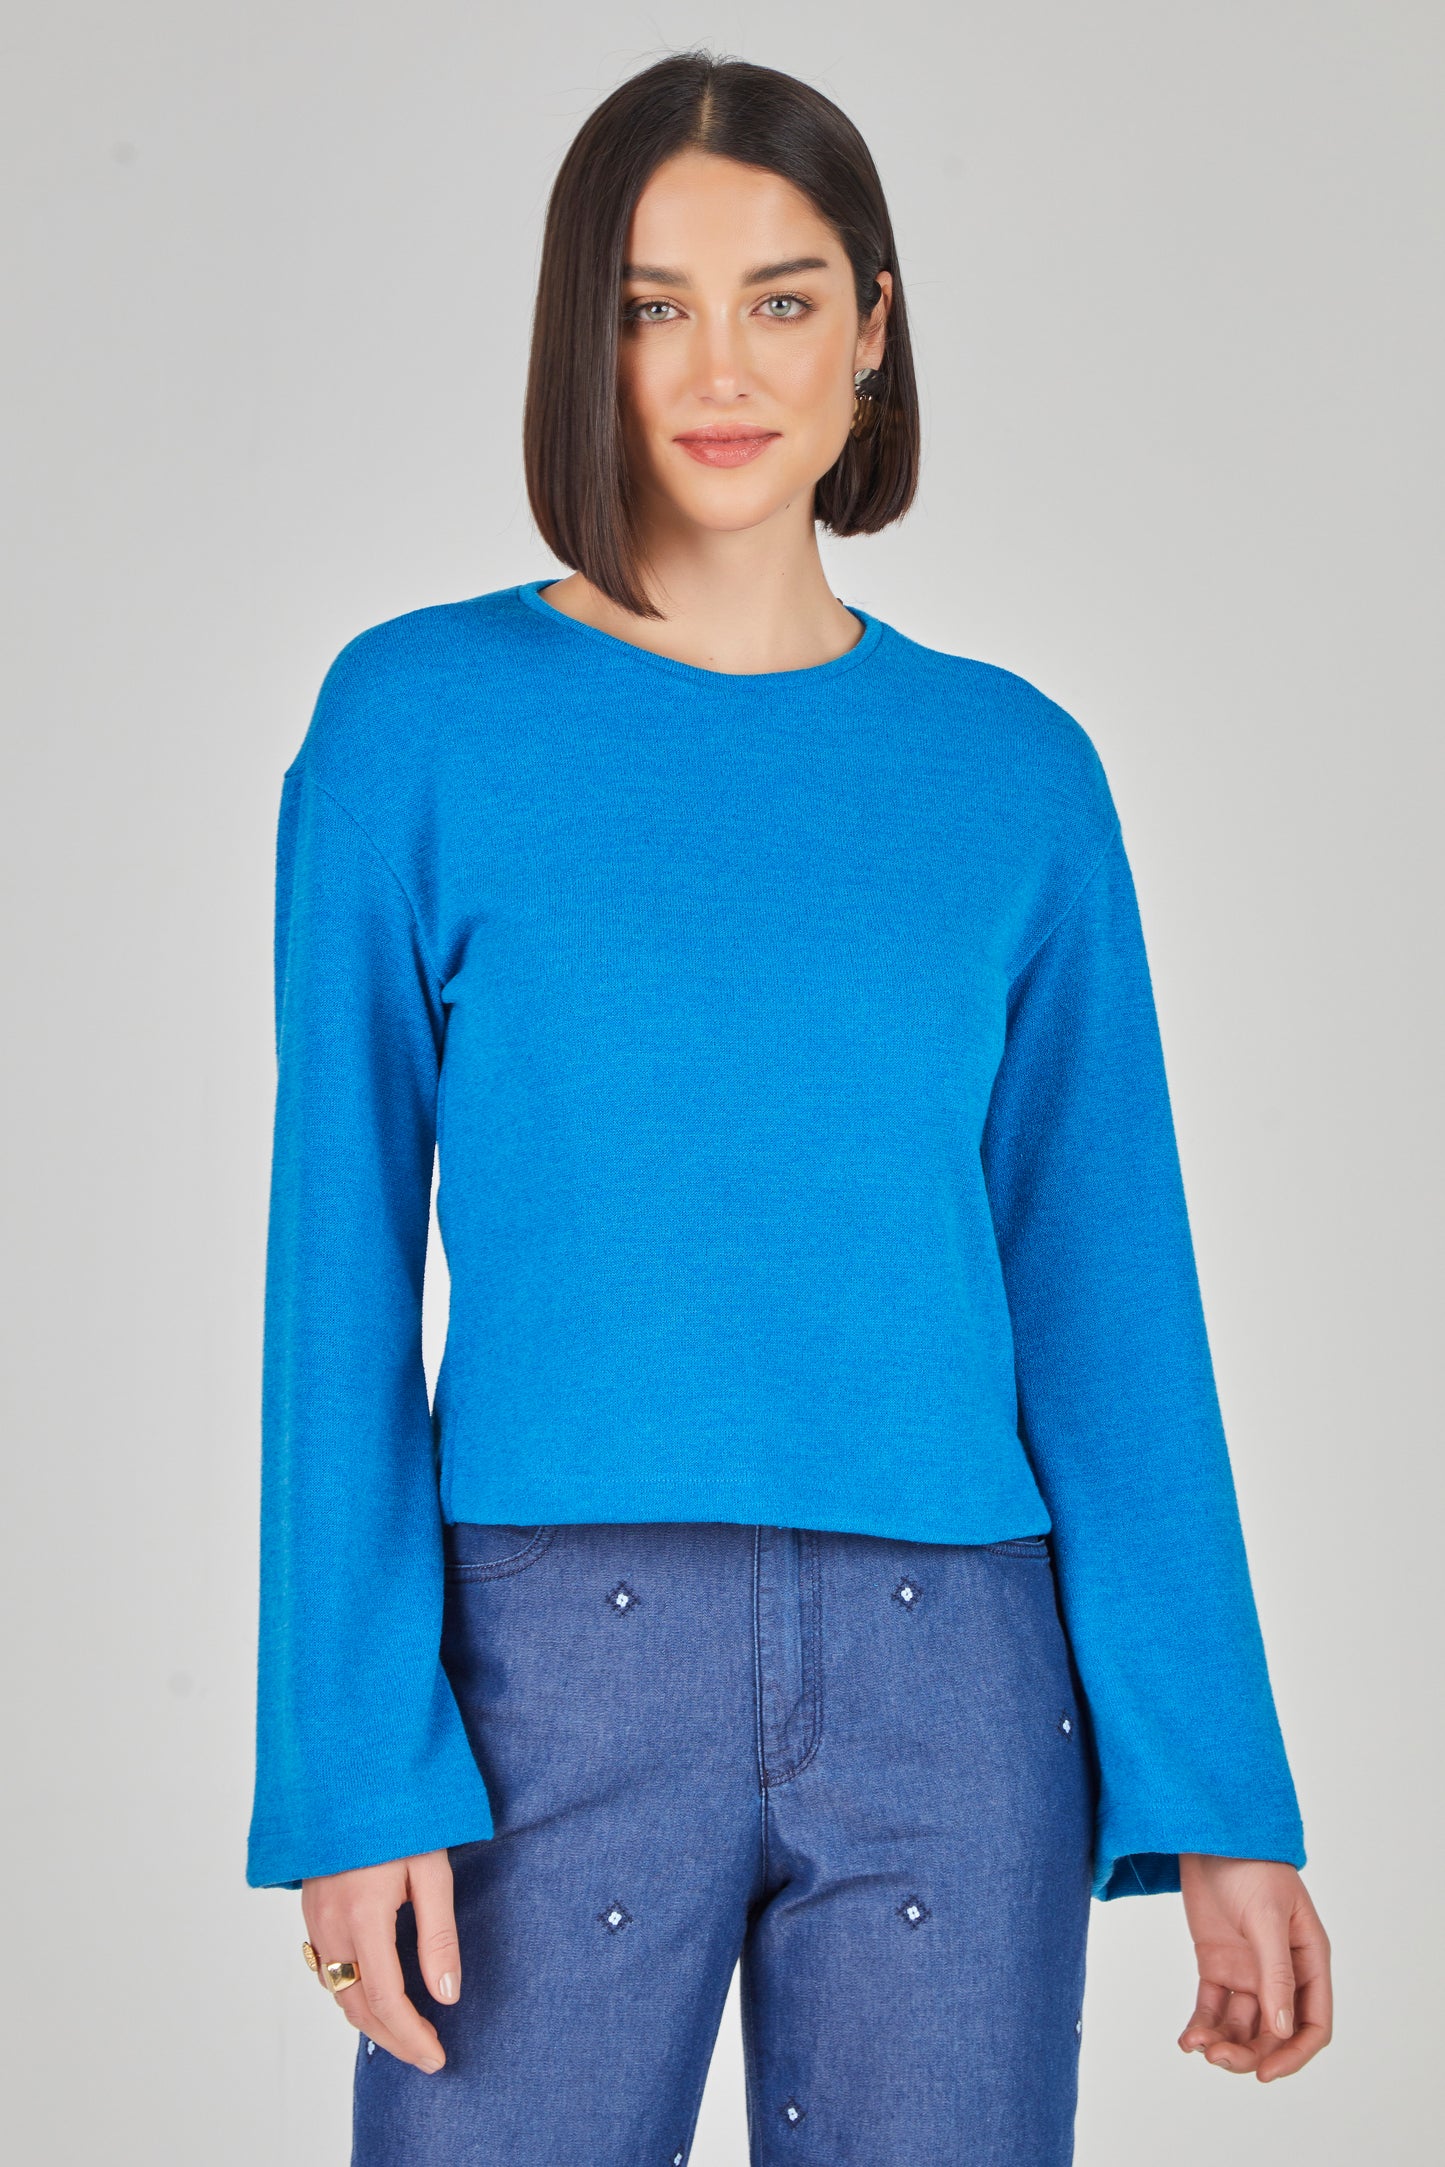 blusa malha tricot manga longa detalhe assimétrico